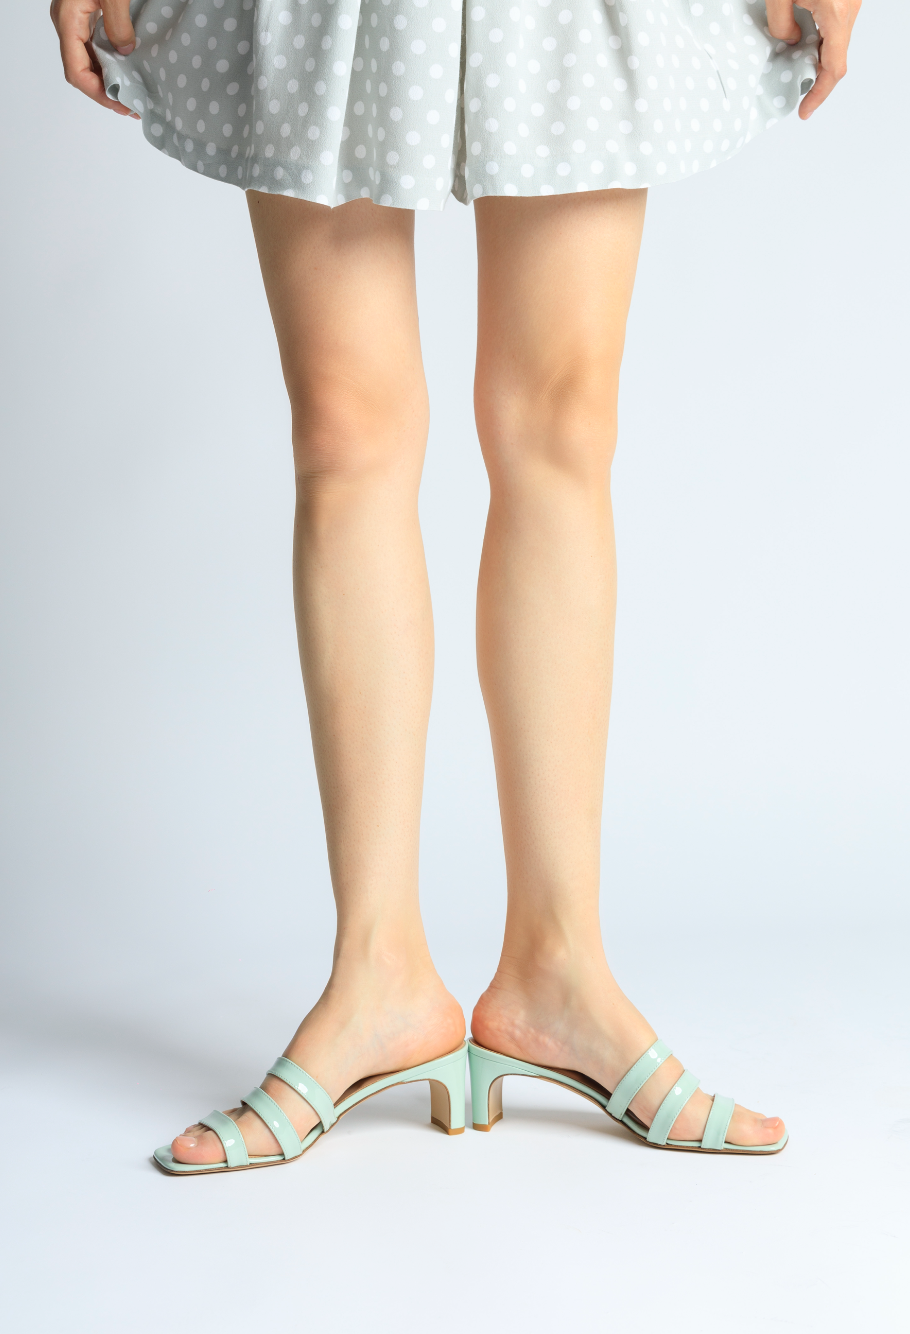 New Heels Mule Sandals In Aquamarine SAN/G31 - 13